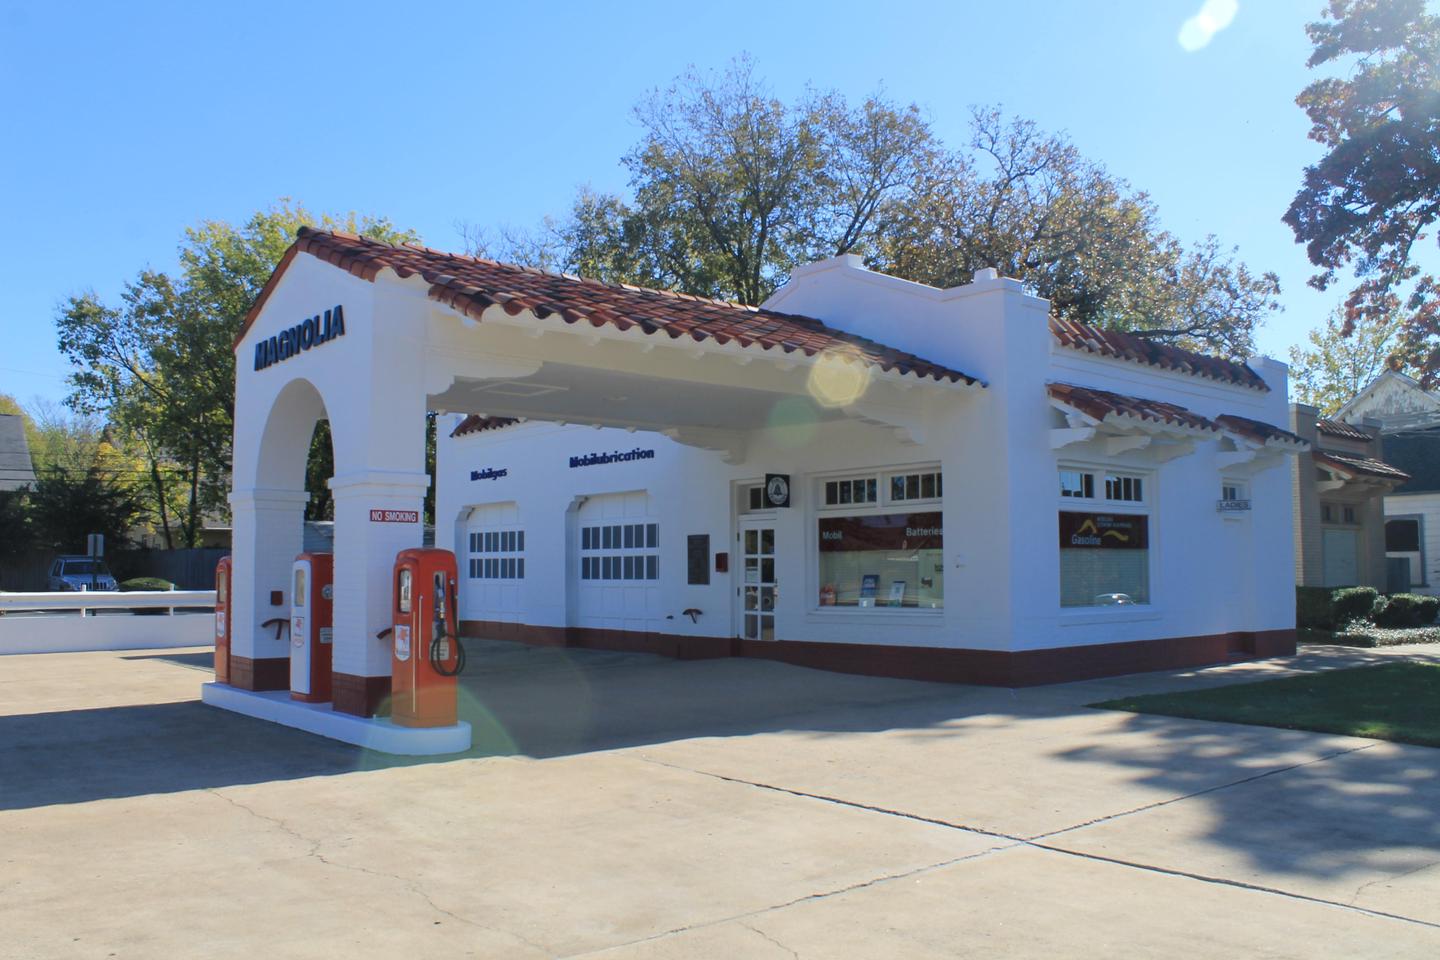 Magnolia Mobil Gas StationThe Magnolia Mobil Gas Station, the de facto media headquarters during the 1957 desegregation crisis.